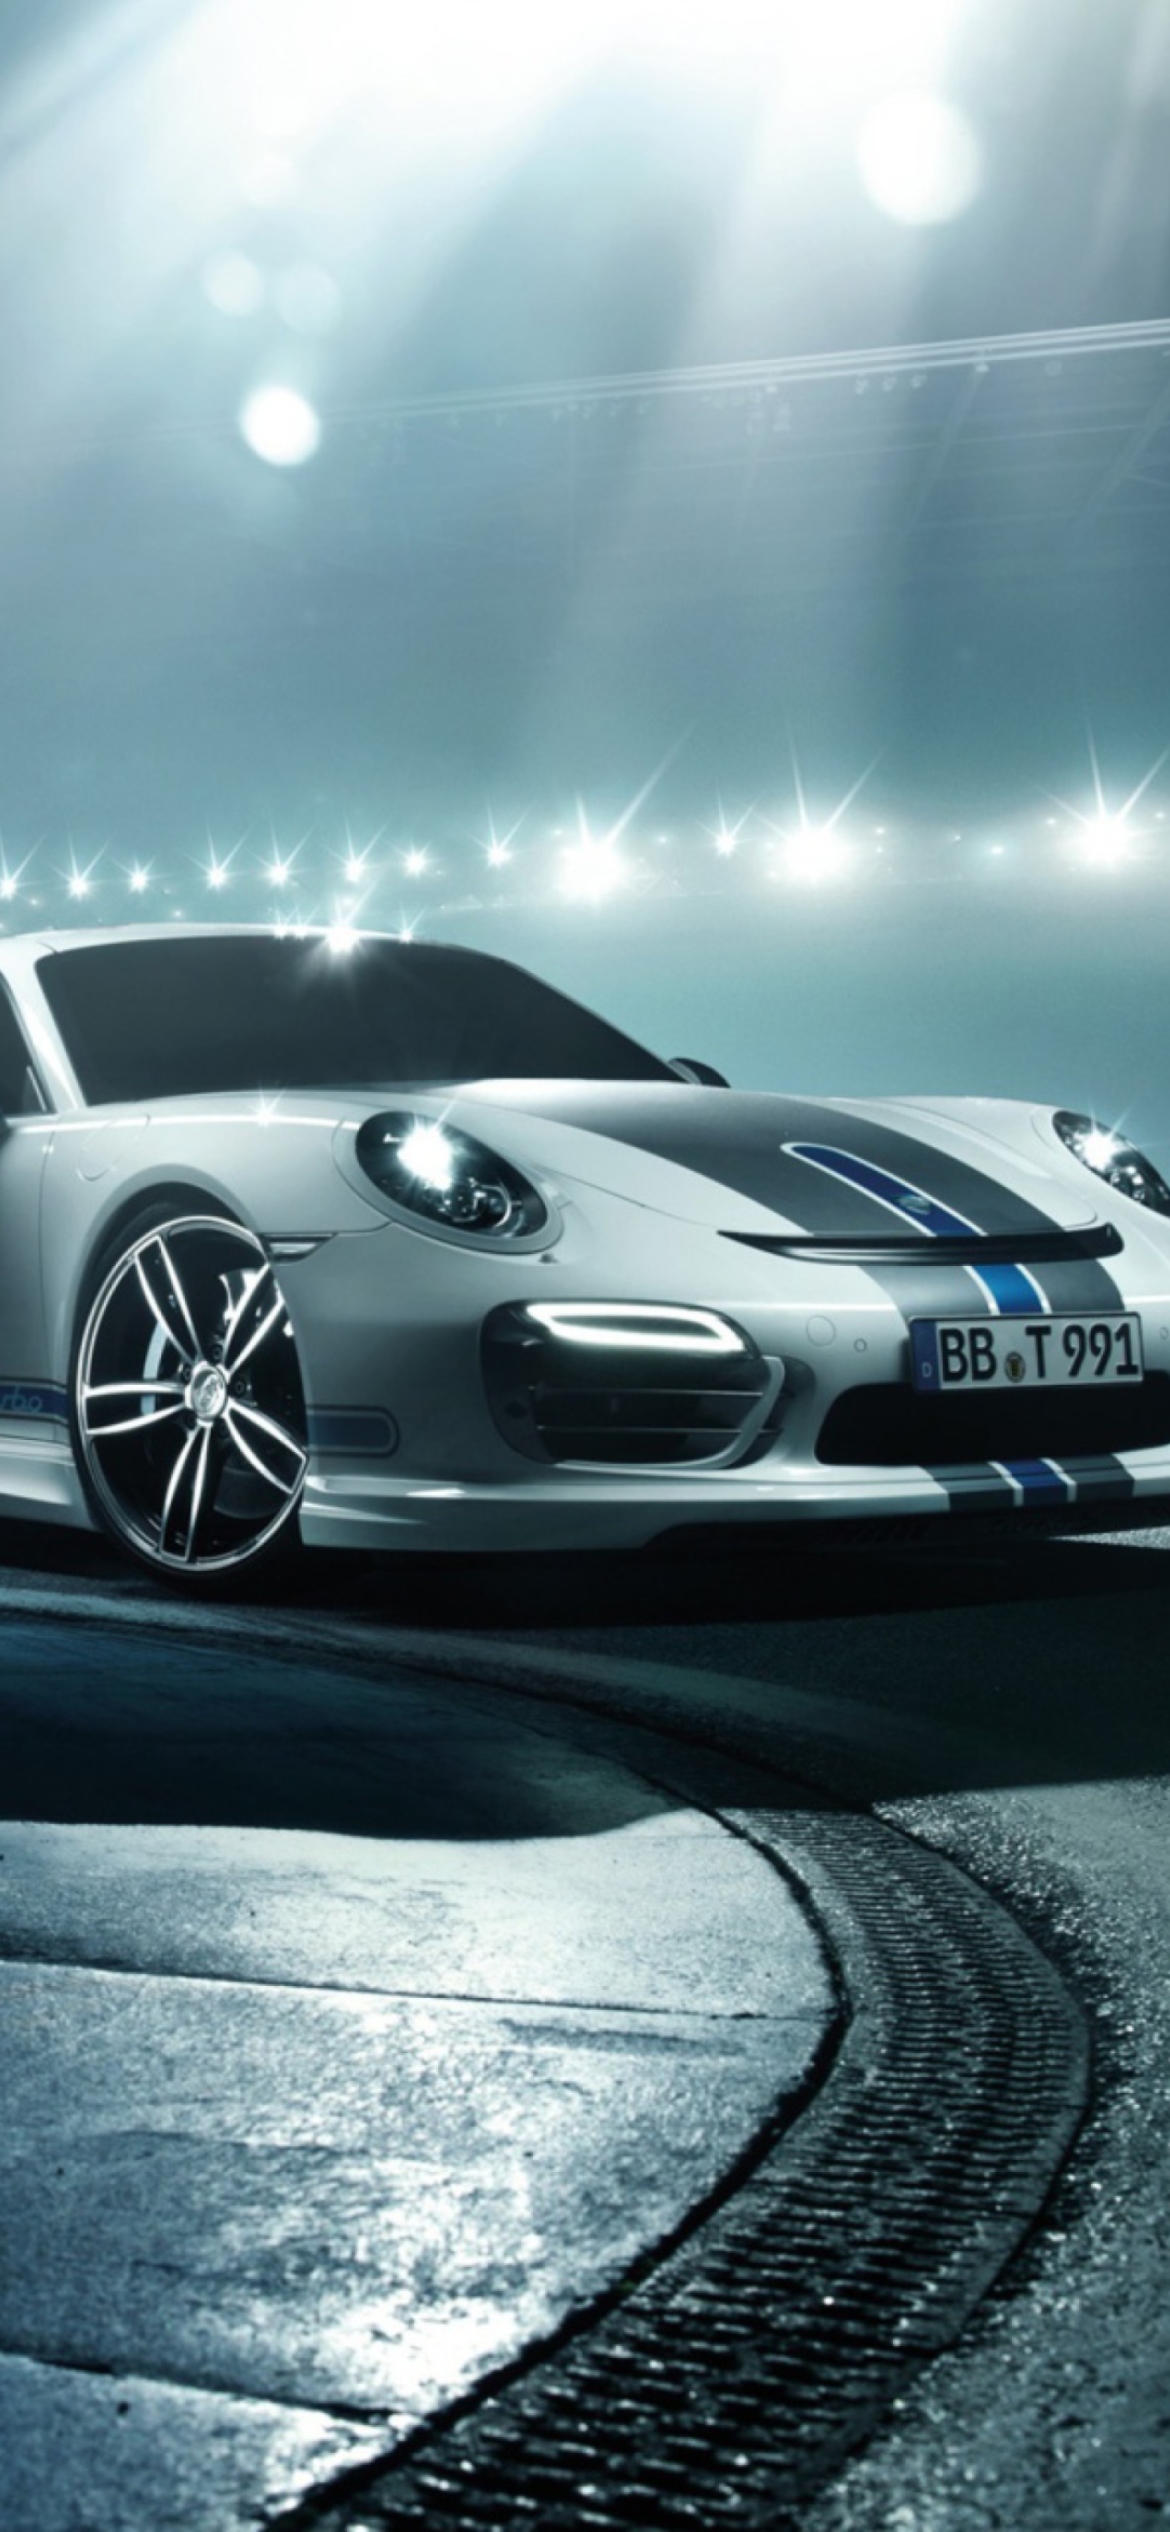 Porsche 911 Turbo Wallpaper for iPhone 12 Pro